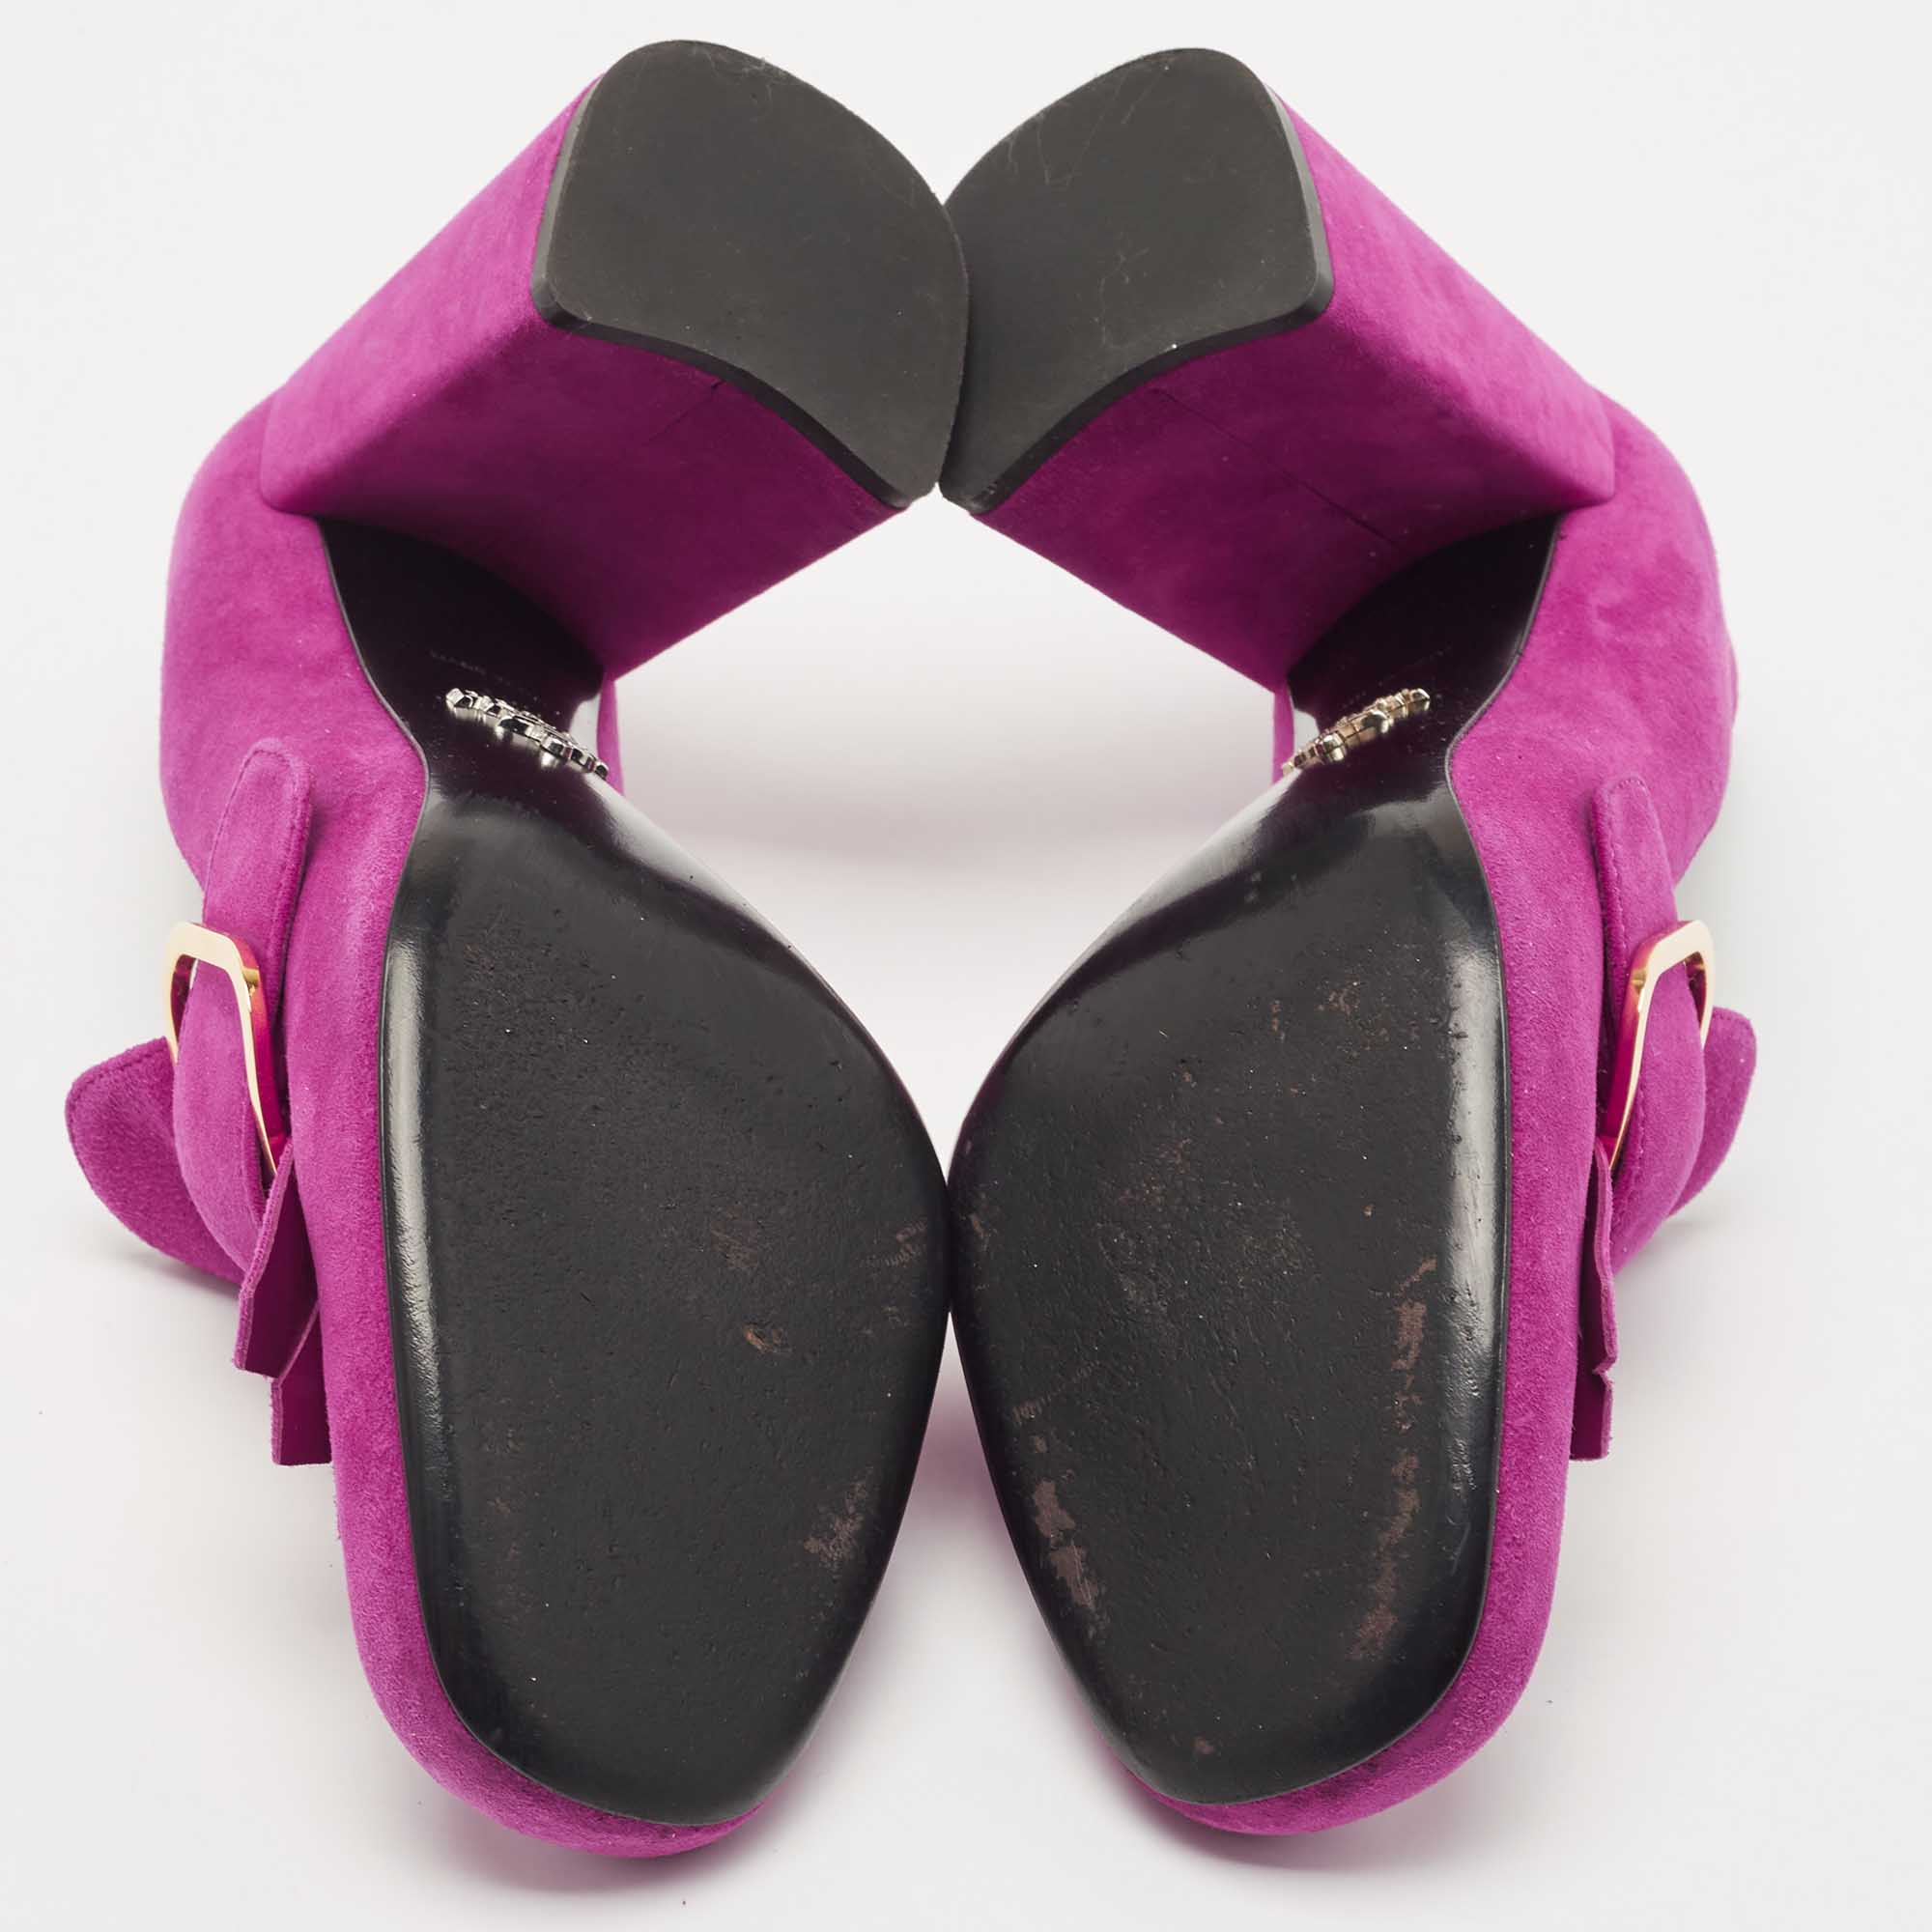 Prada Pink Suede Fringe Buckle Details Block Heel Pumps Size 38.5